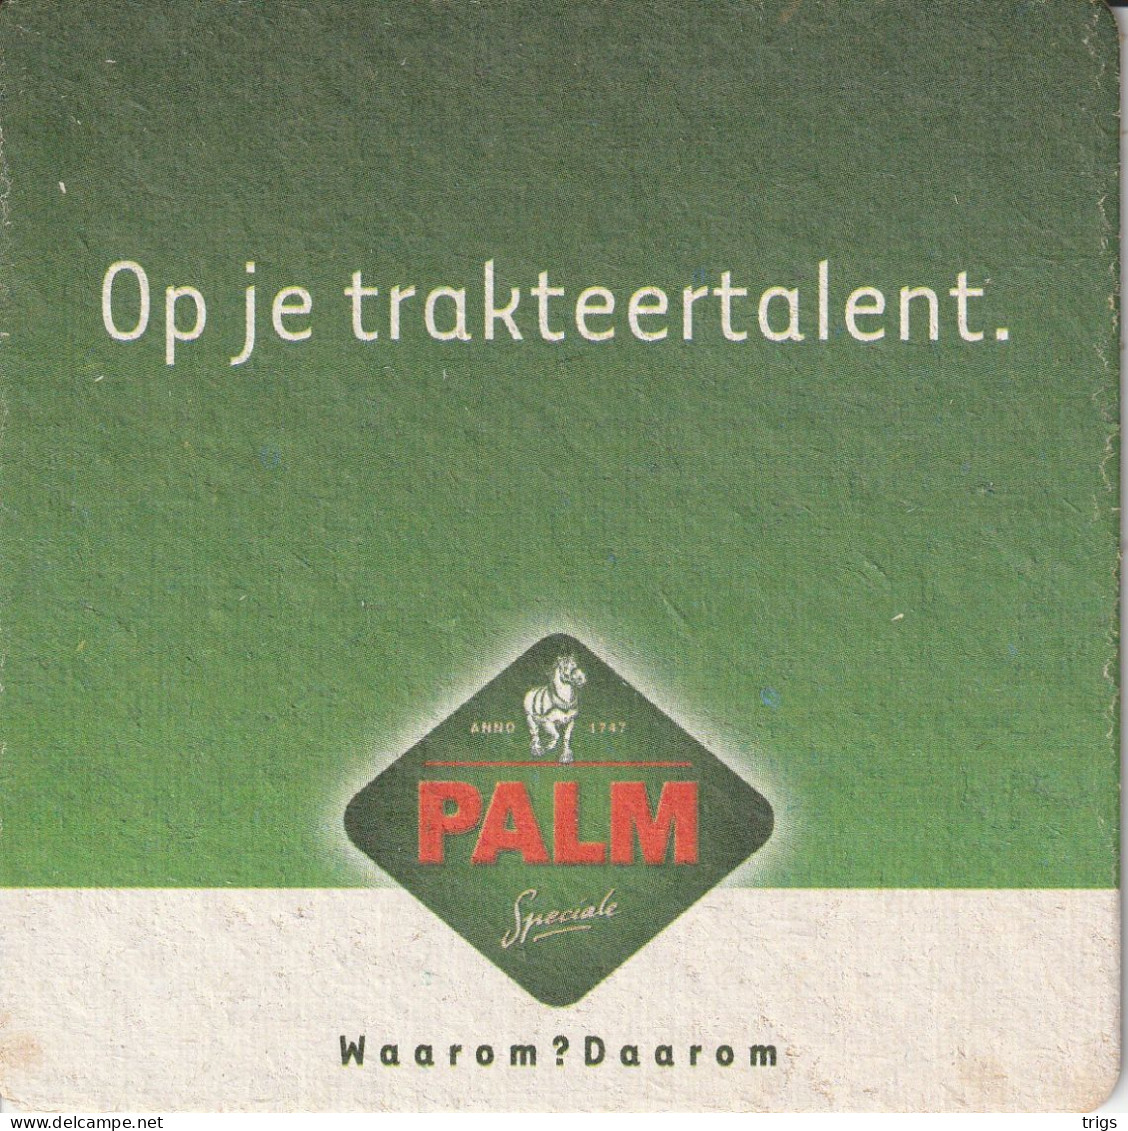 Palm - Portavasos